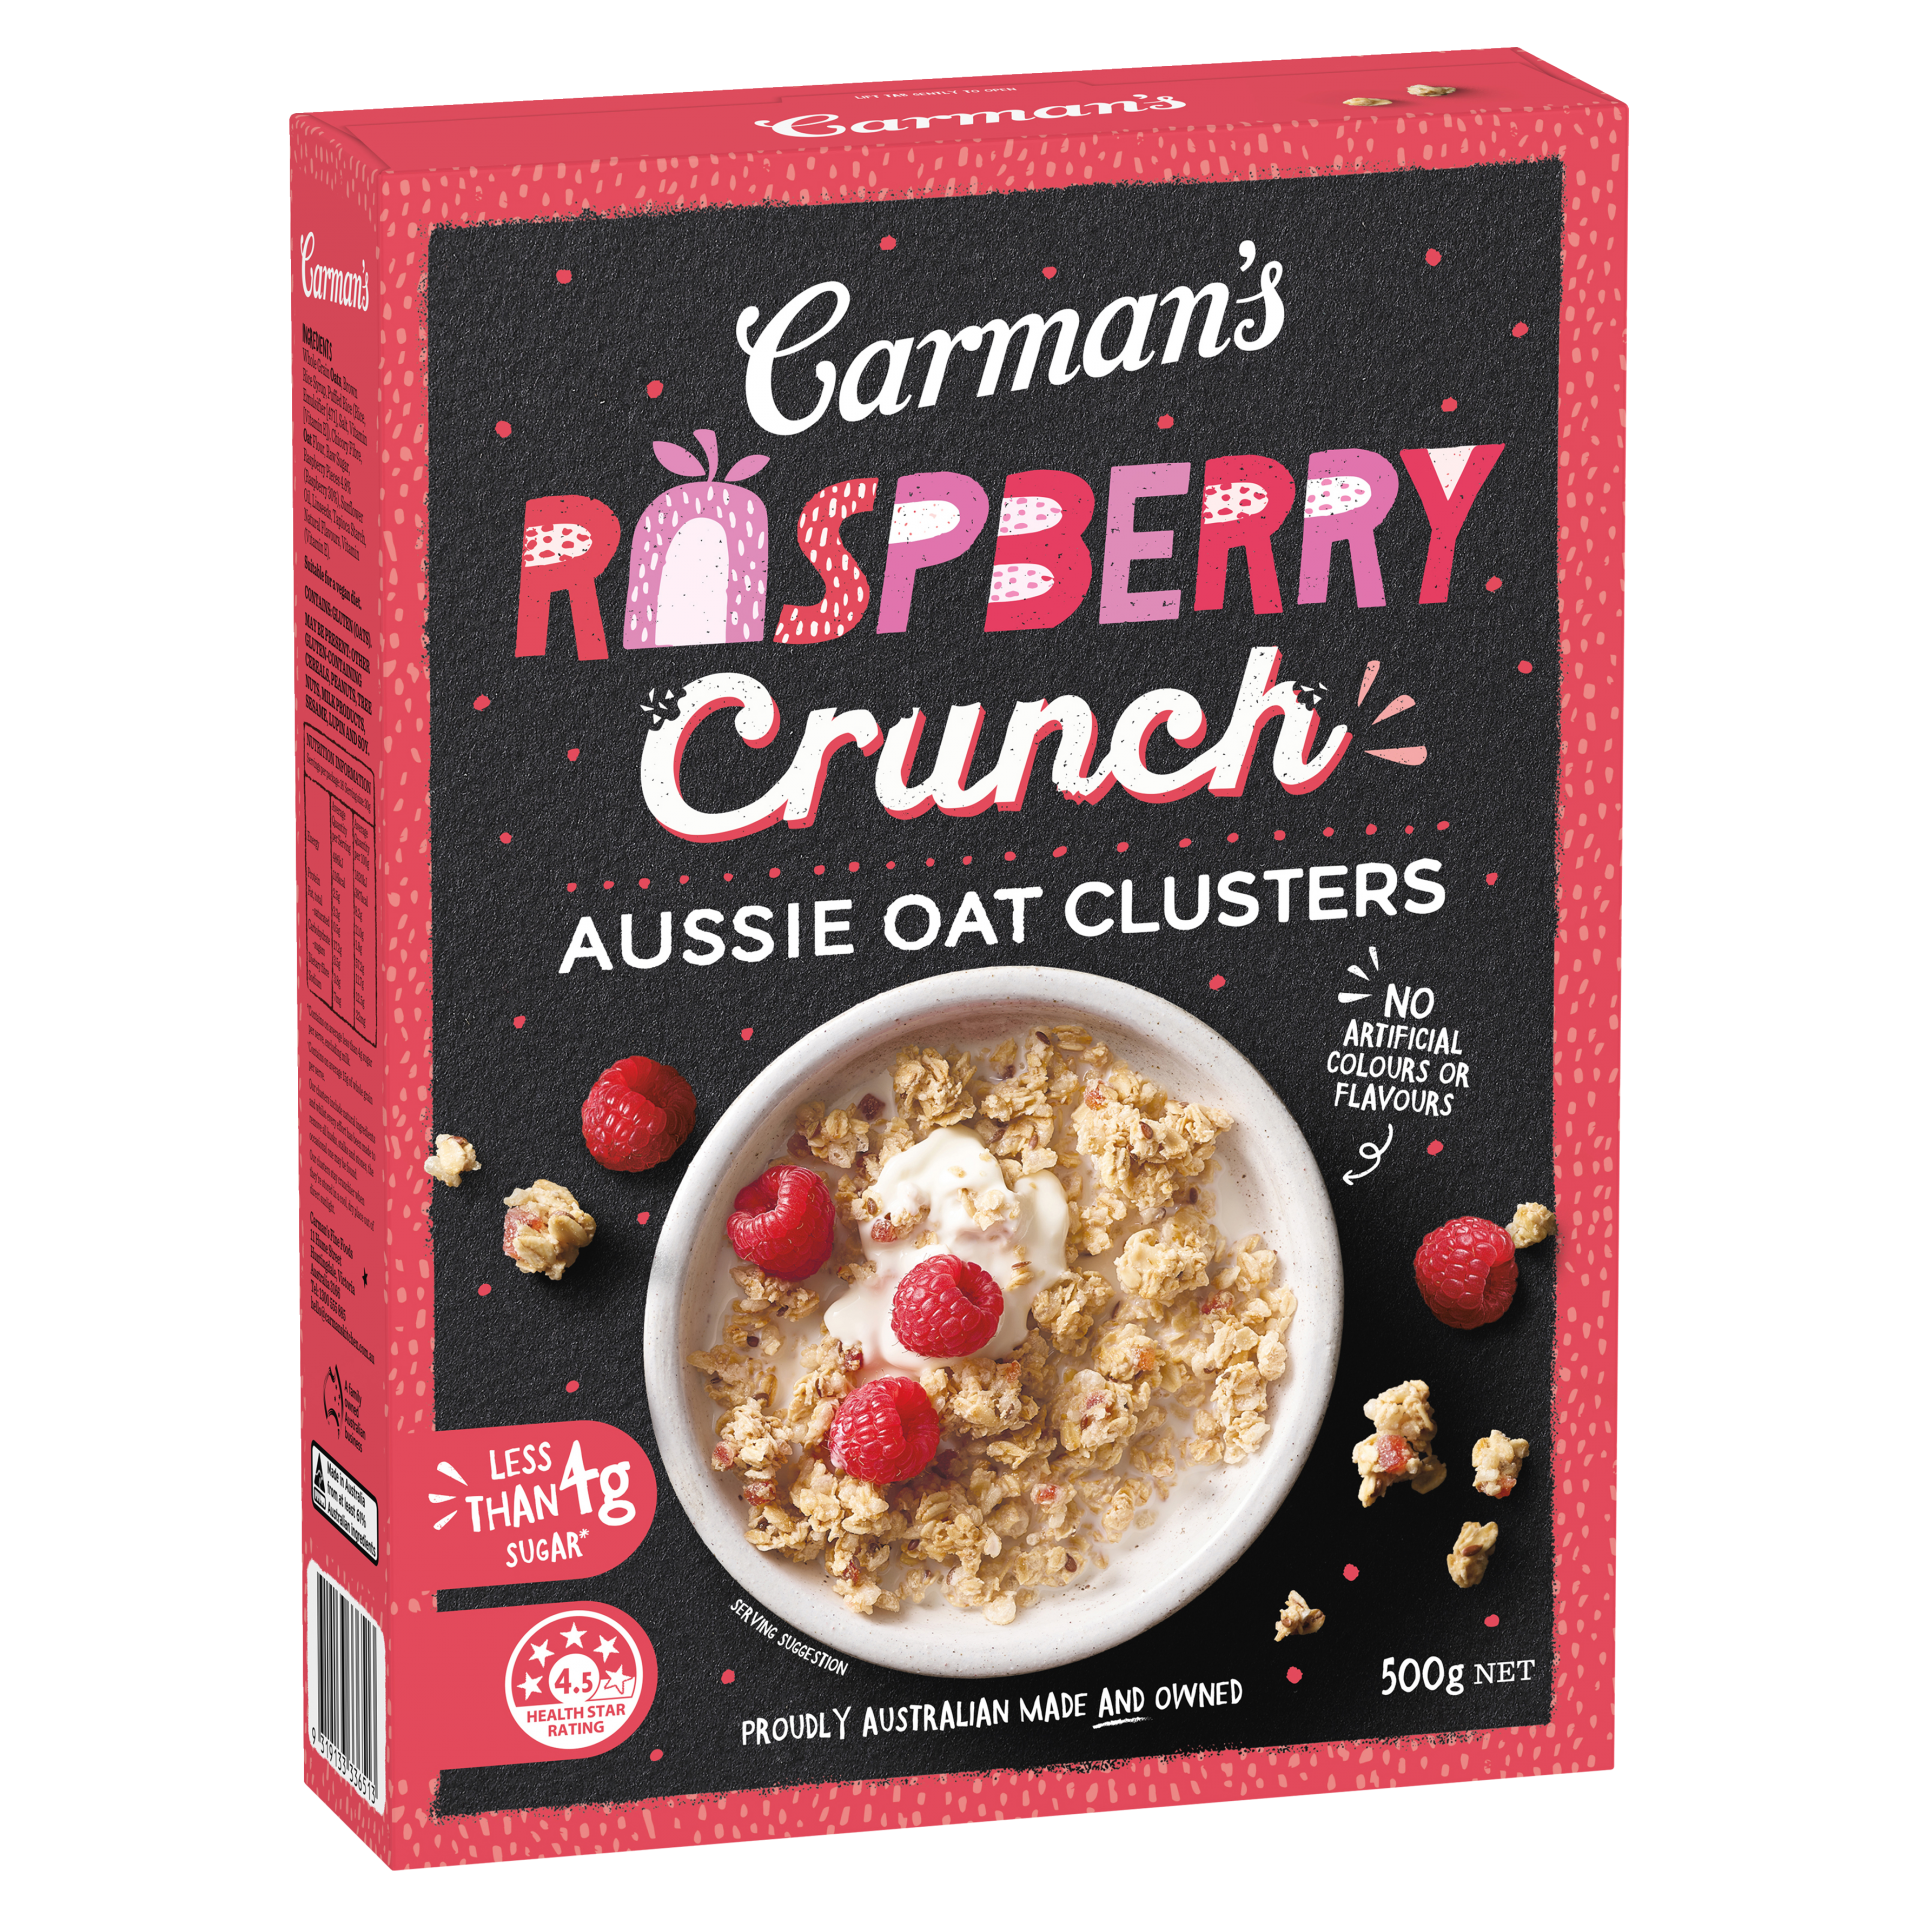 Raspberry Crunch Aussie Oat Clusters